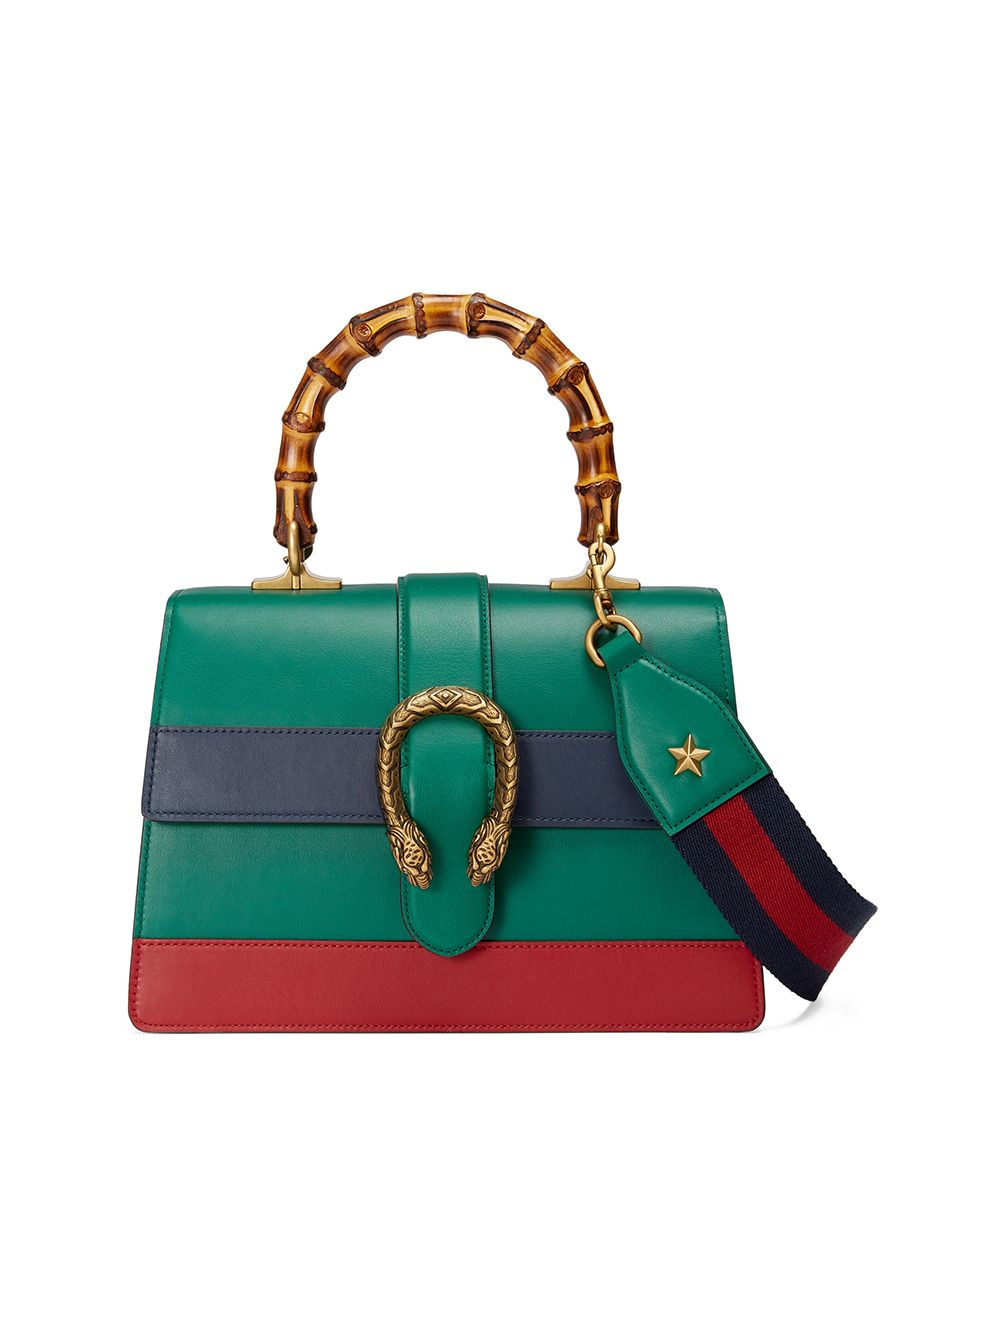 Gucci Dionysus Leather Top Handle Bag - Farfetch